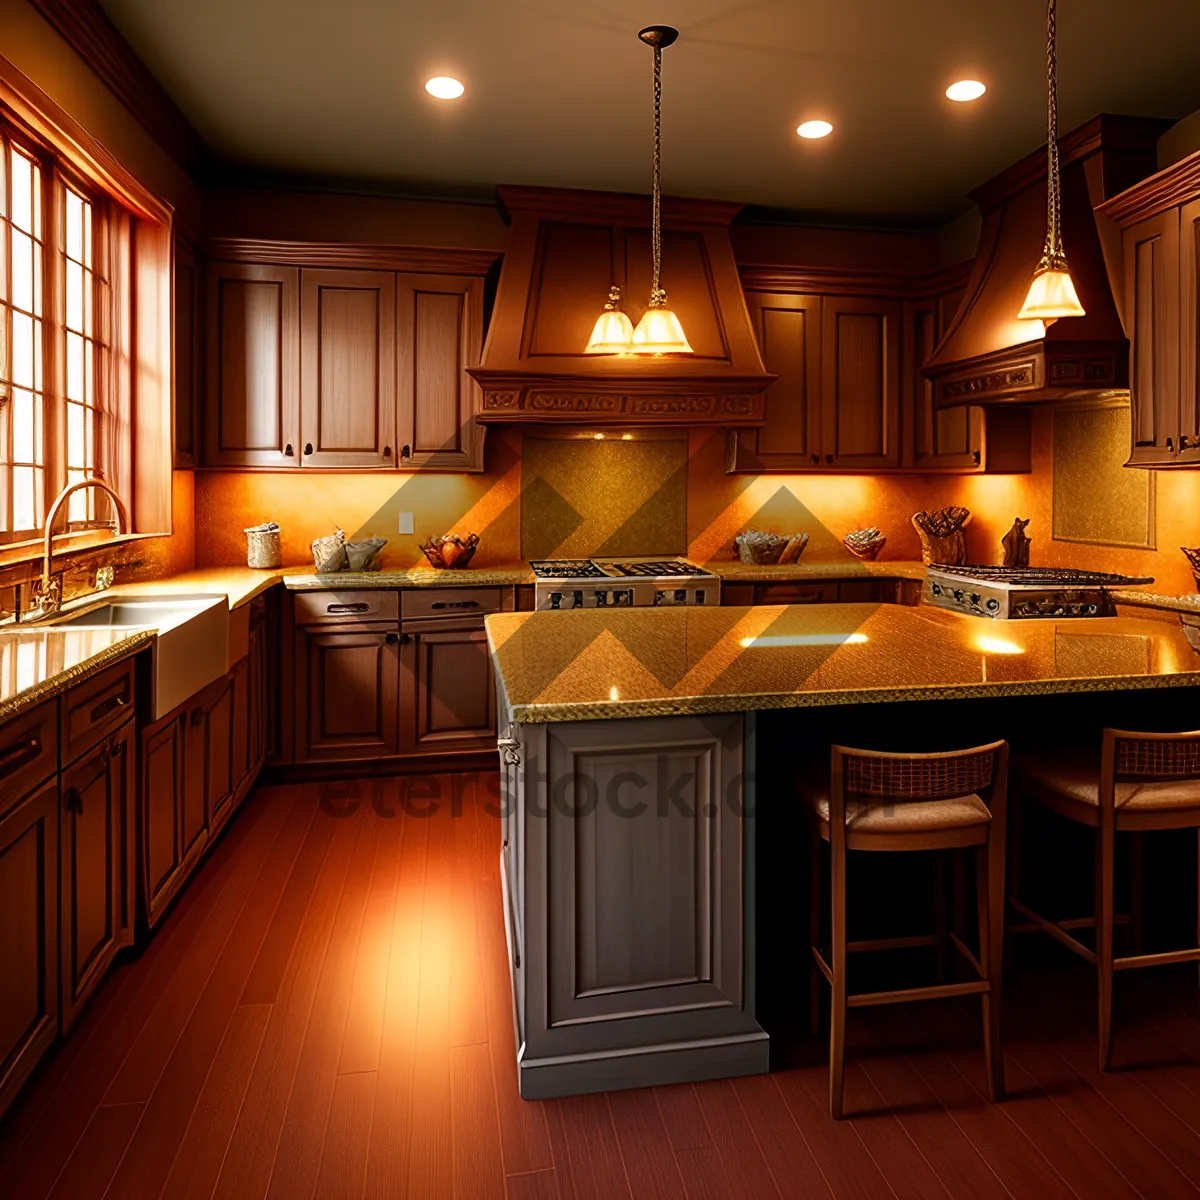 Picture of Modern Luxury Kitchen Interior with Stylish Decor